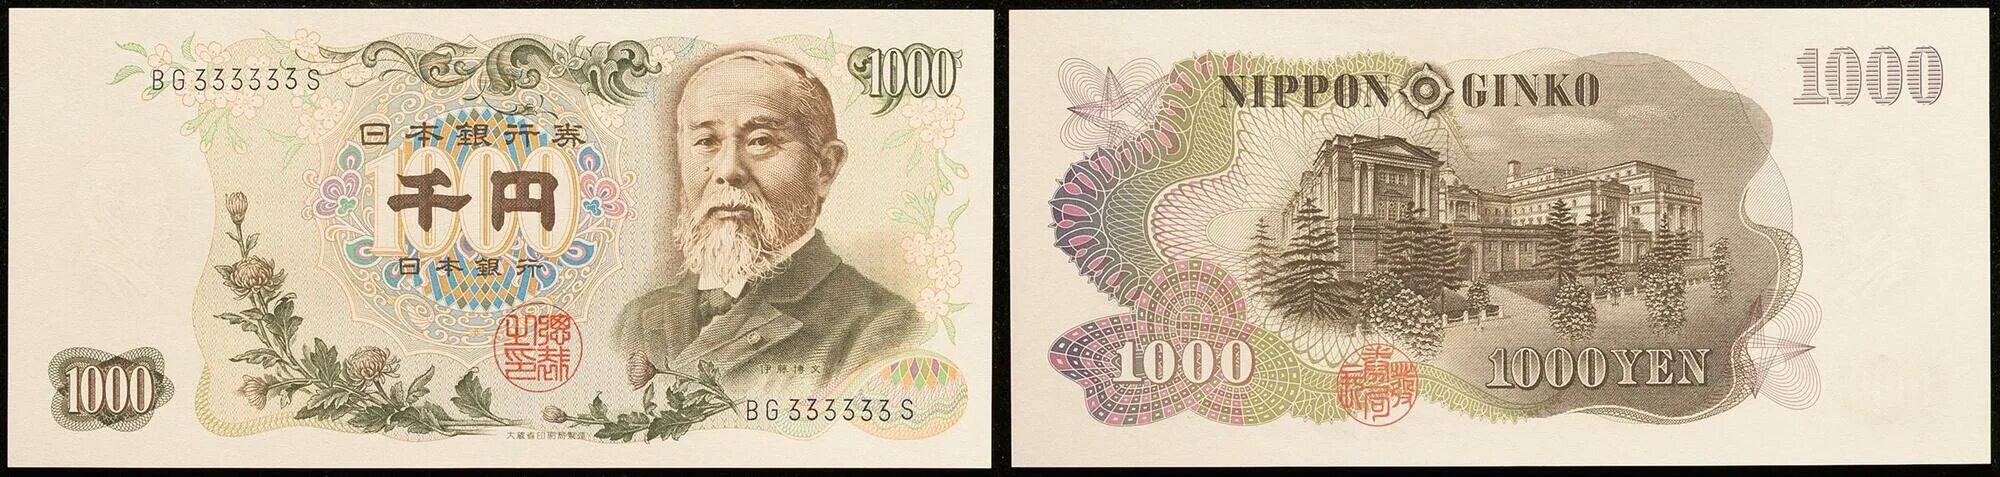 10 ен в рублях. Nippon Ginko 1000. Банкнота 1000 йен 2019 года. Гривни в японские йены. 10000 Йен.